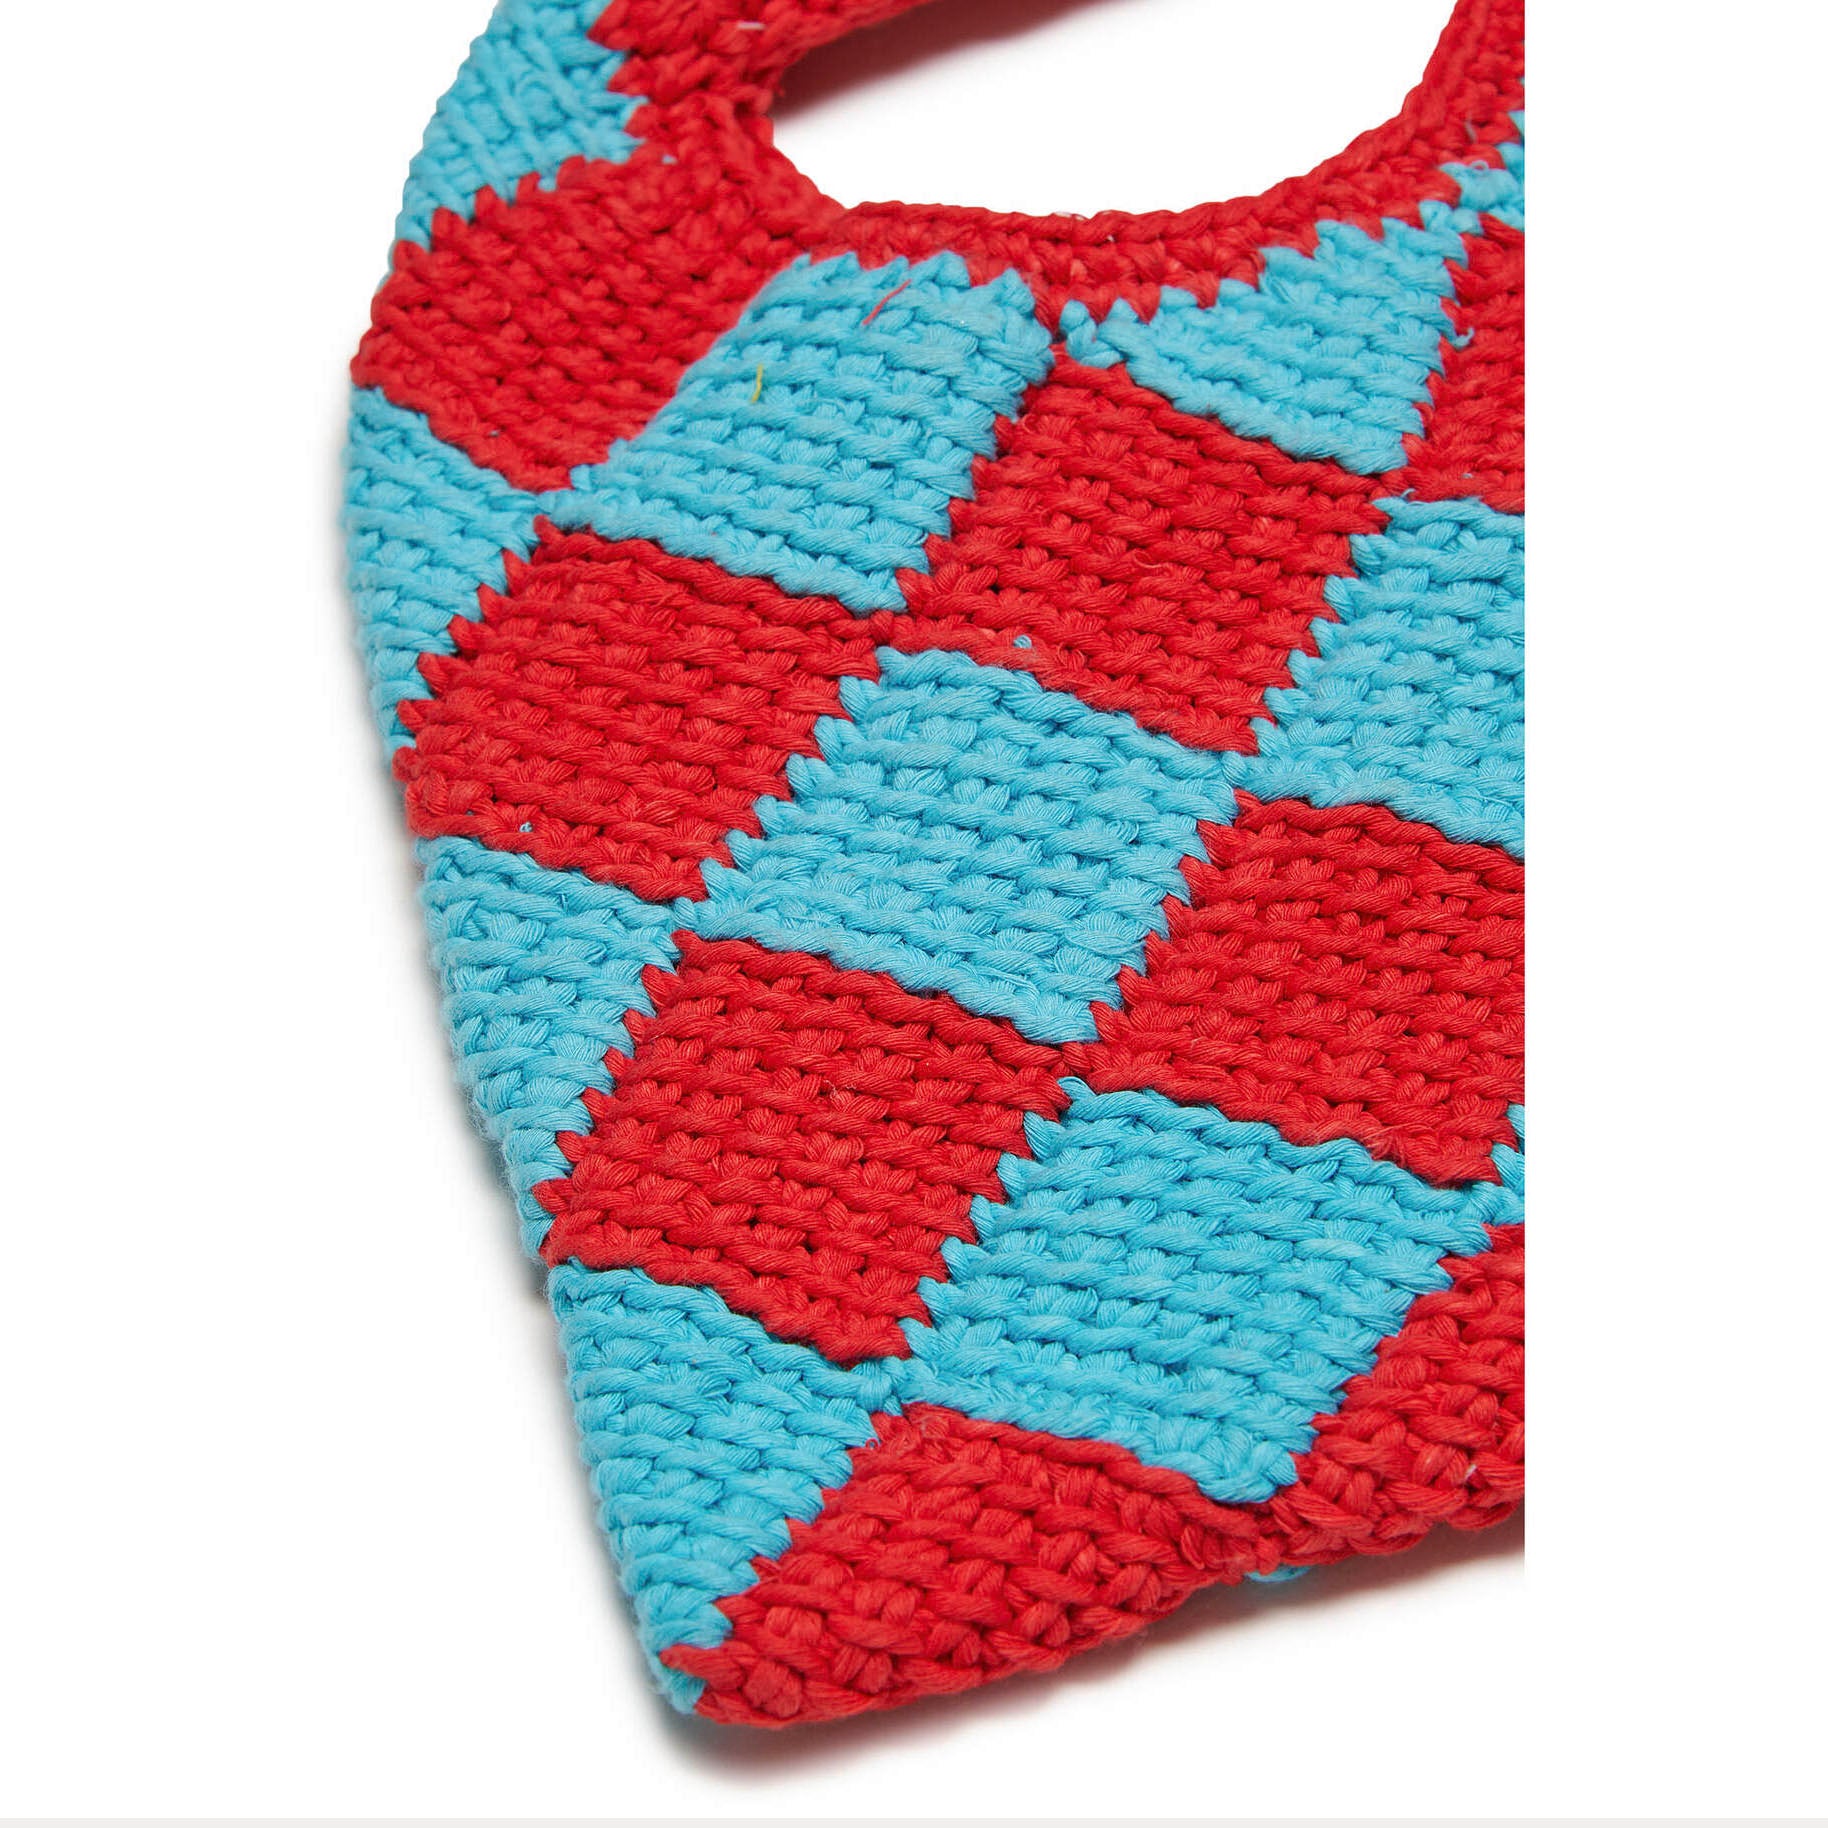 Girls Red Check Crochet Handbag